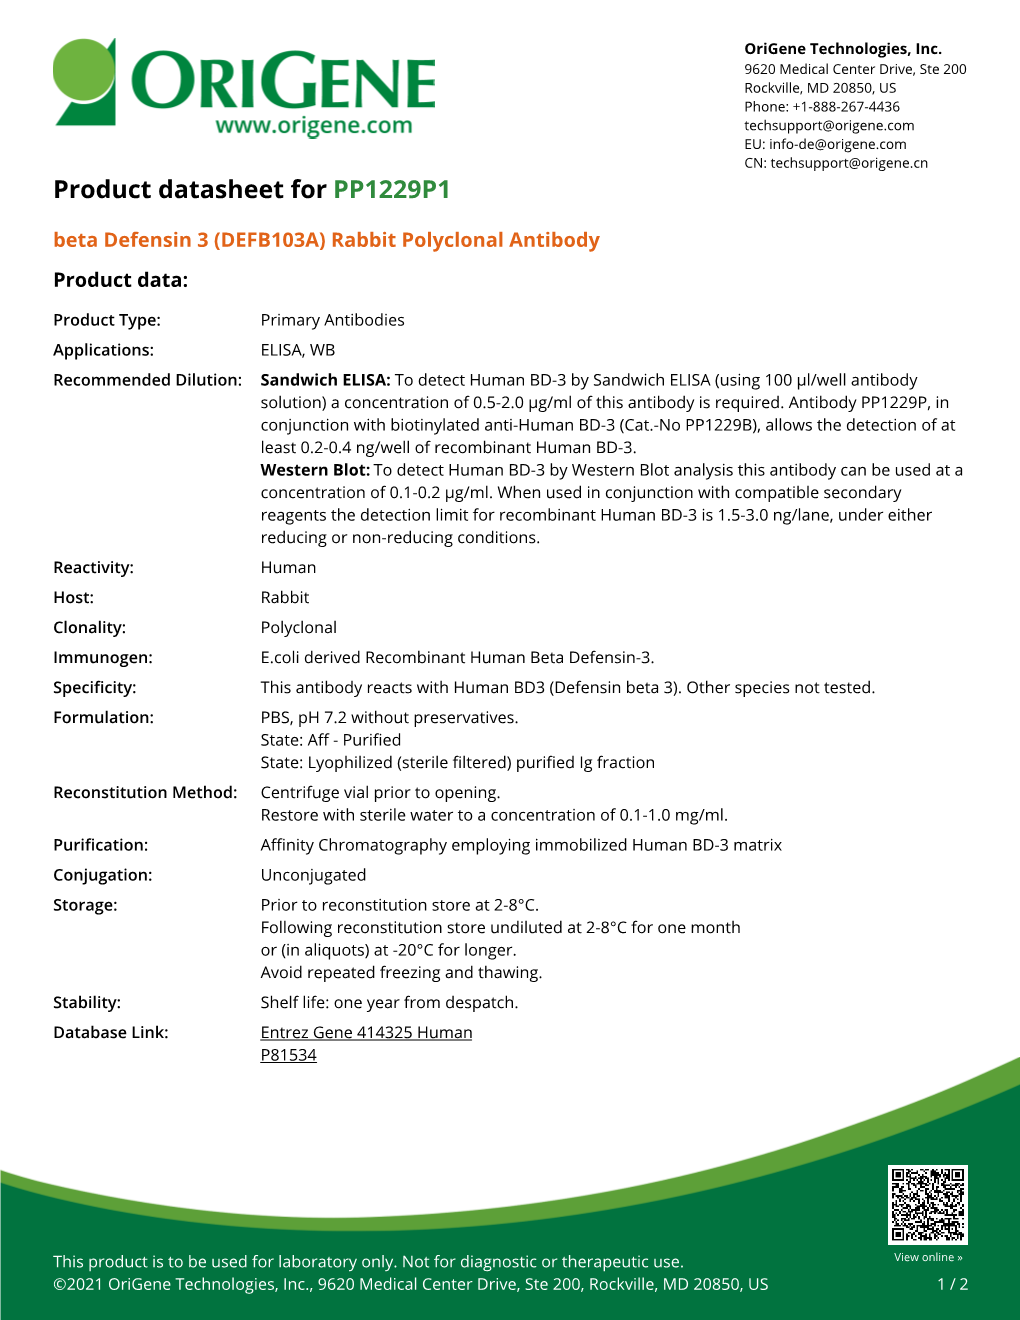 Beta Defensin 3 (DEFB103A) Rabbit Polyclonal Antibody Product Data